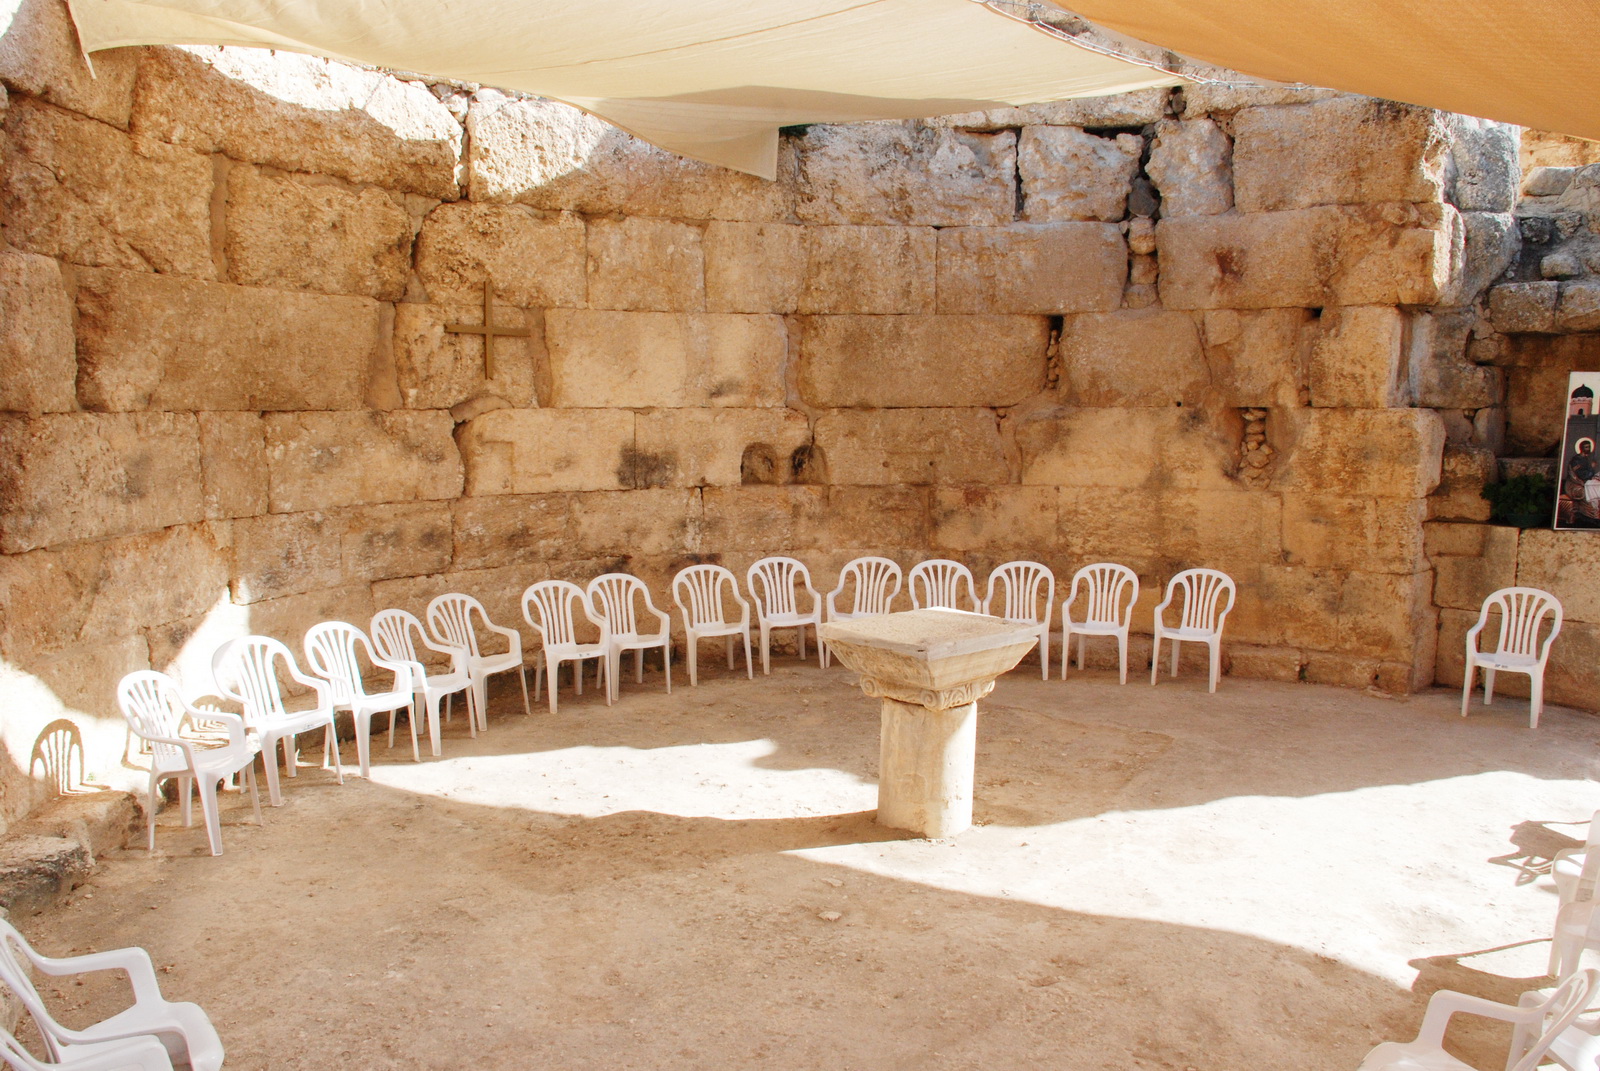 כנסיית אמאוס - האפסיס המרכזי ערוך למיסה